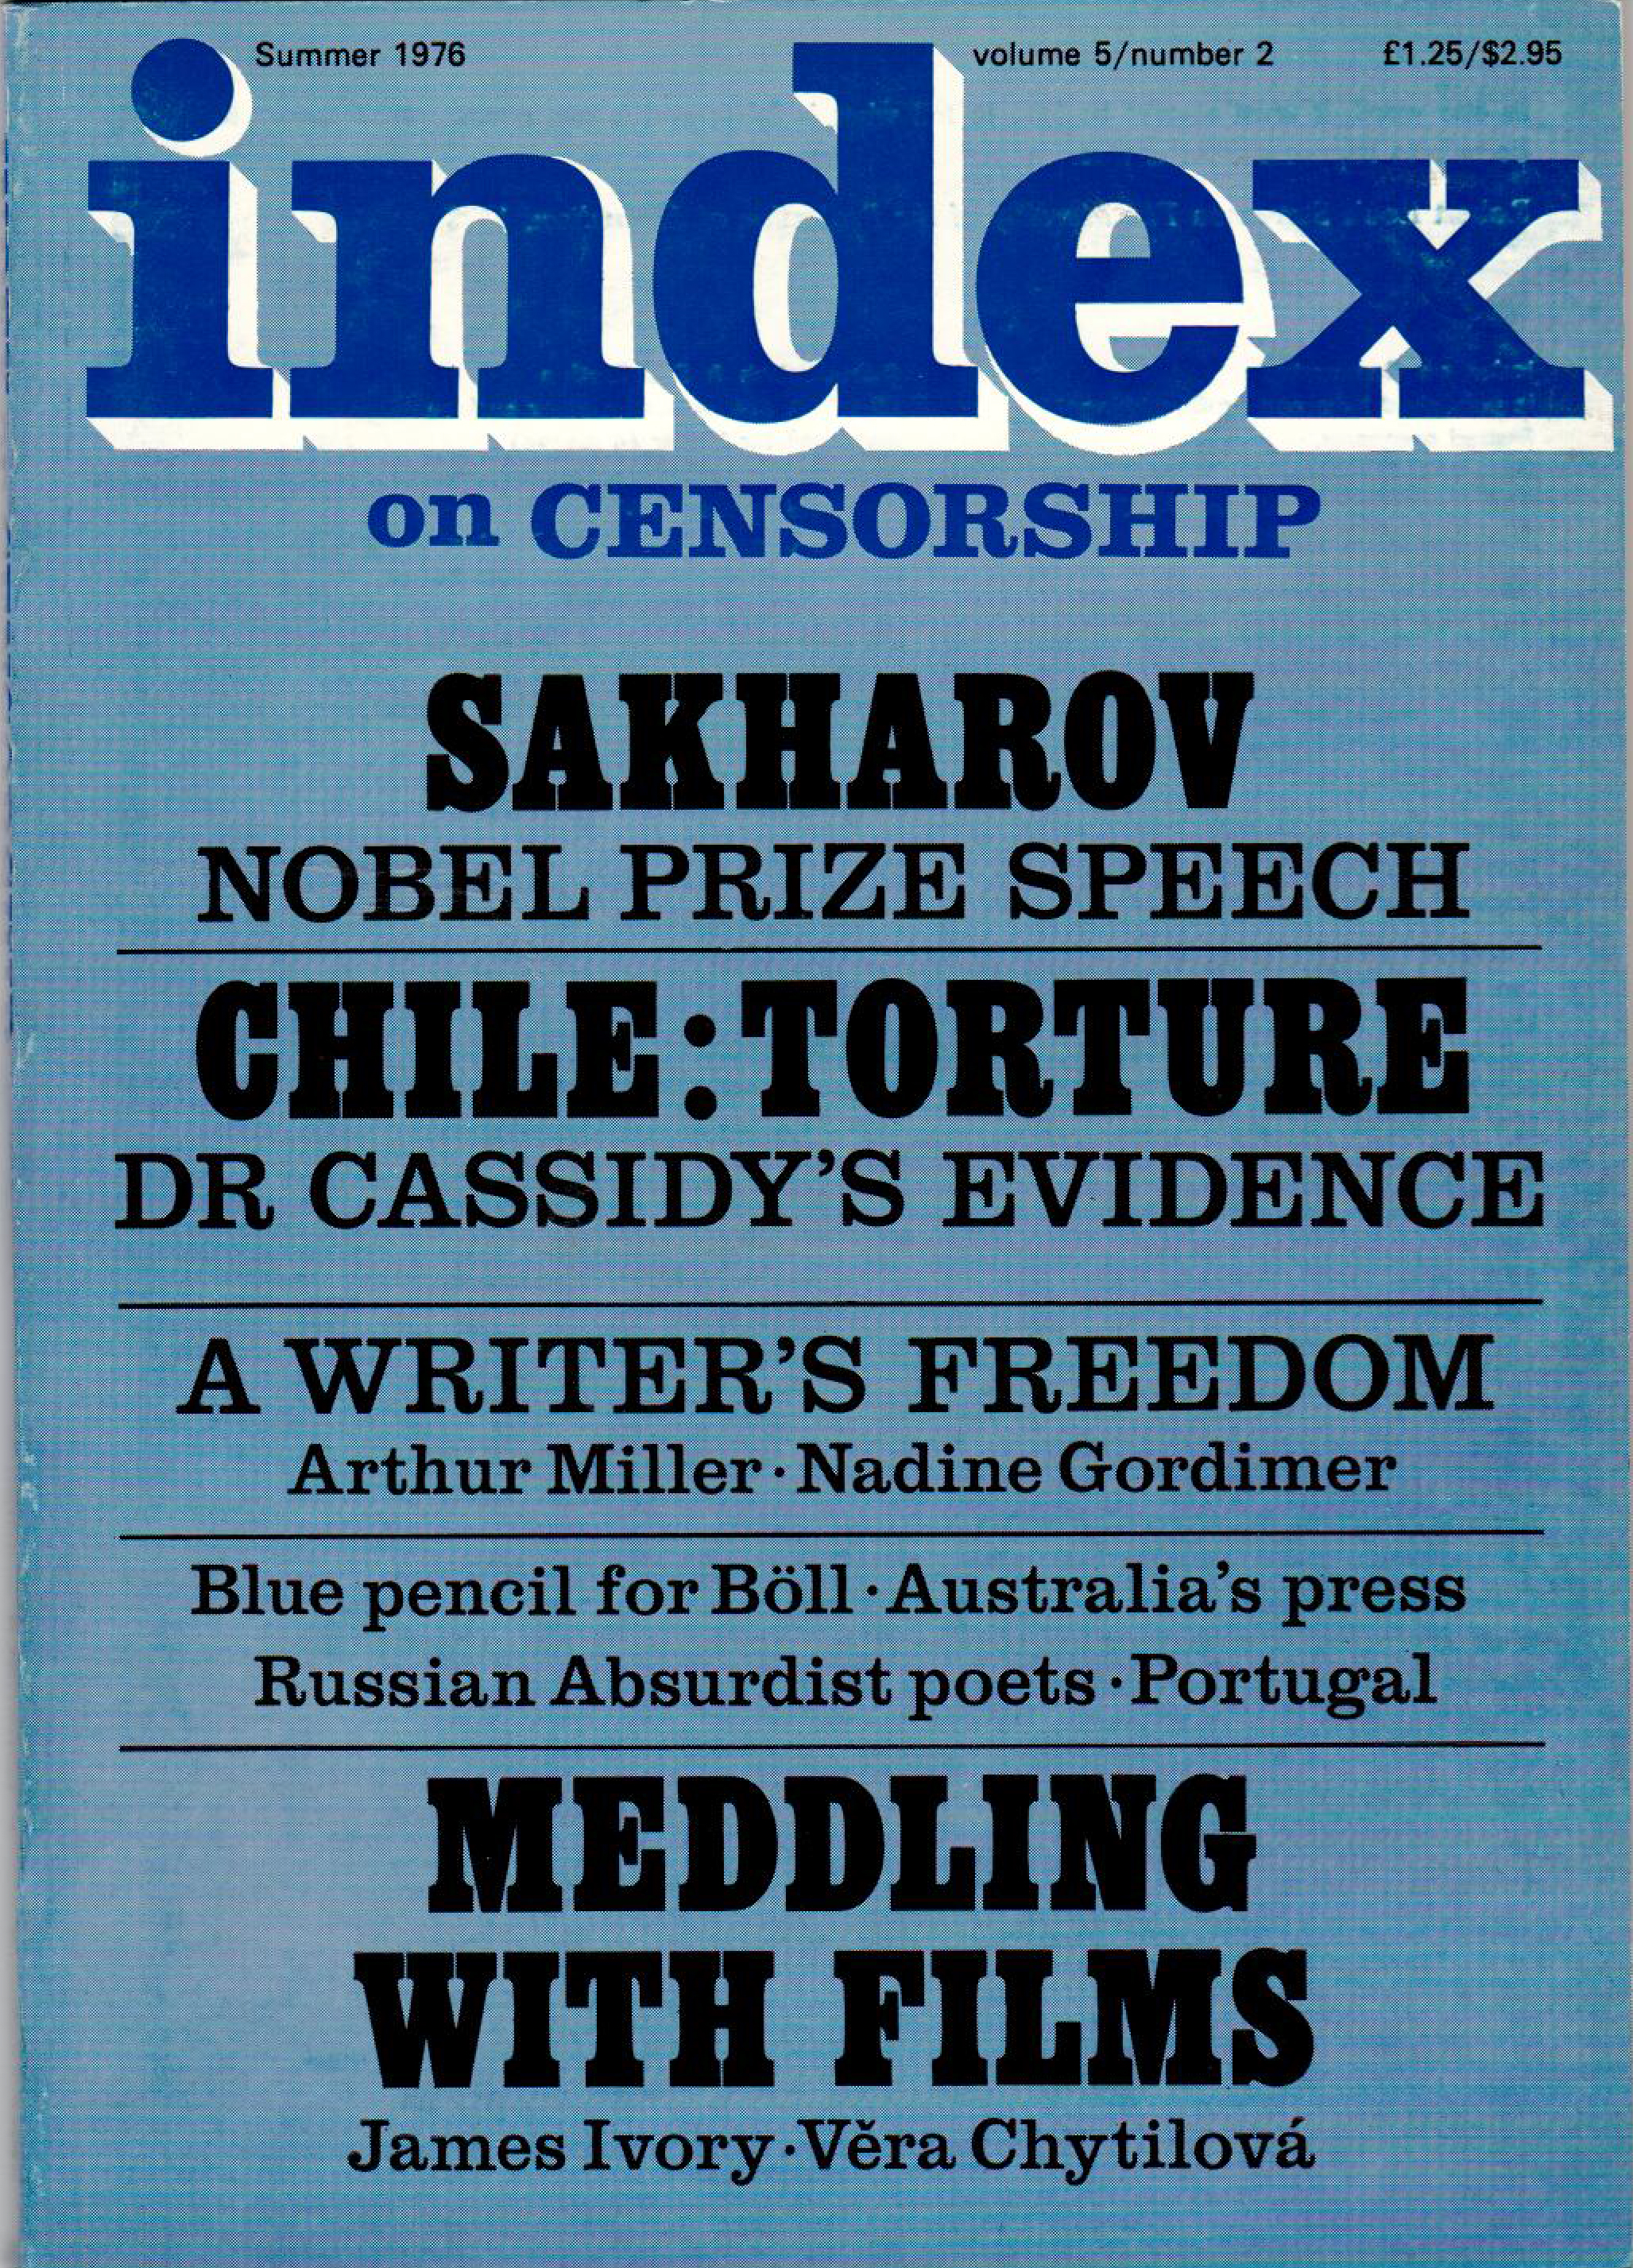 Sakharov Nobel Prize speech, the Summer 1976 issue of Index on Censorship magazine